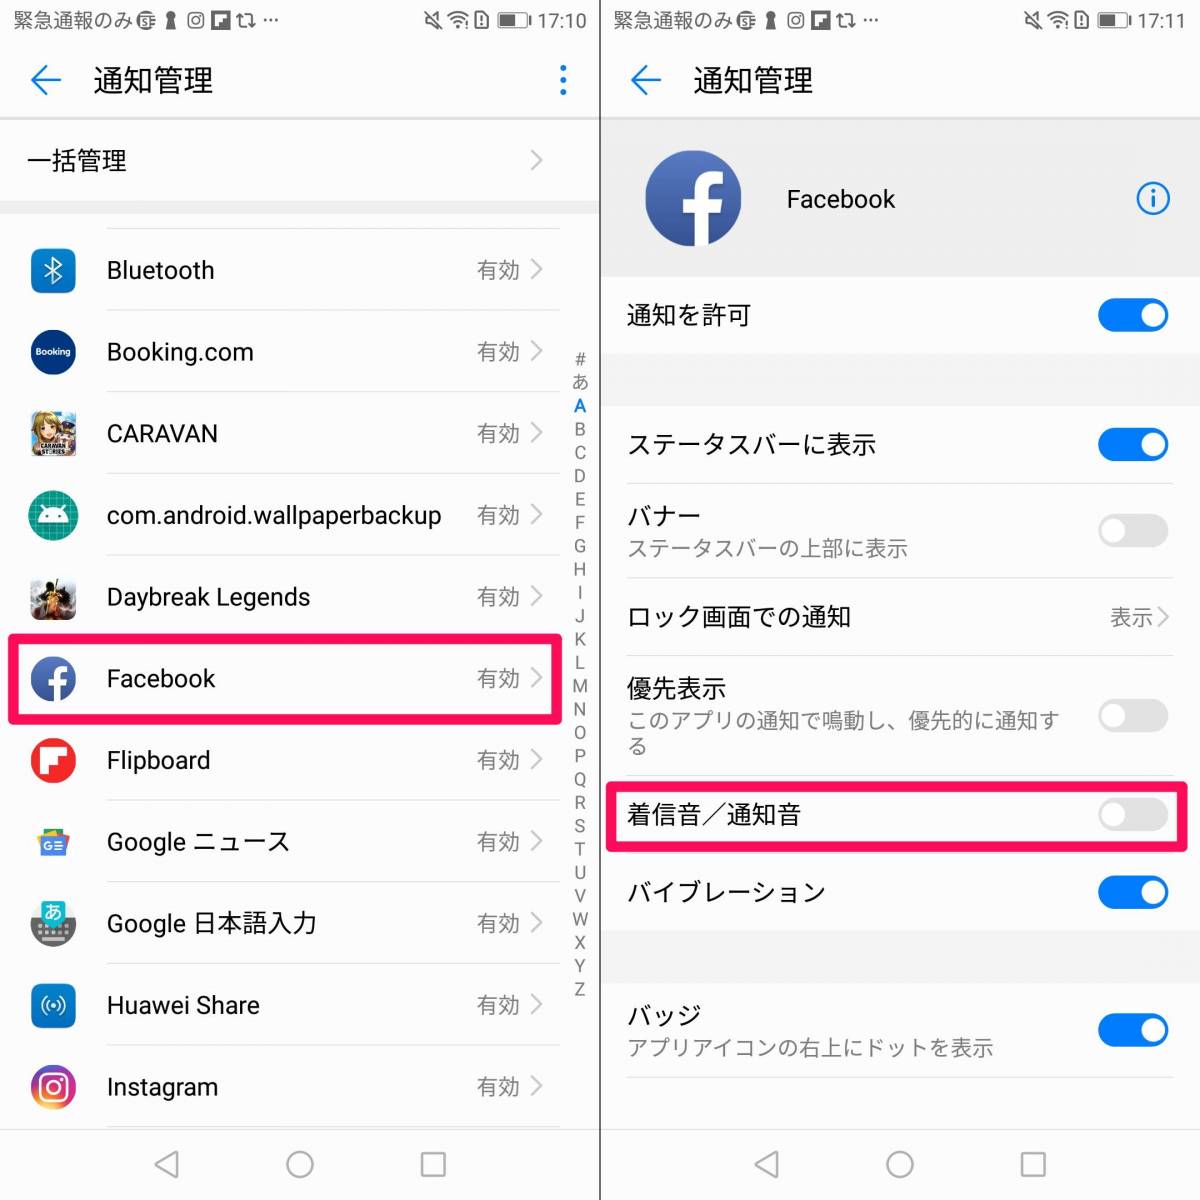 Facebook 通知のオン オフ設定方法 来ない時の対処法 Iphone Android Appliv Topics